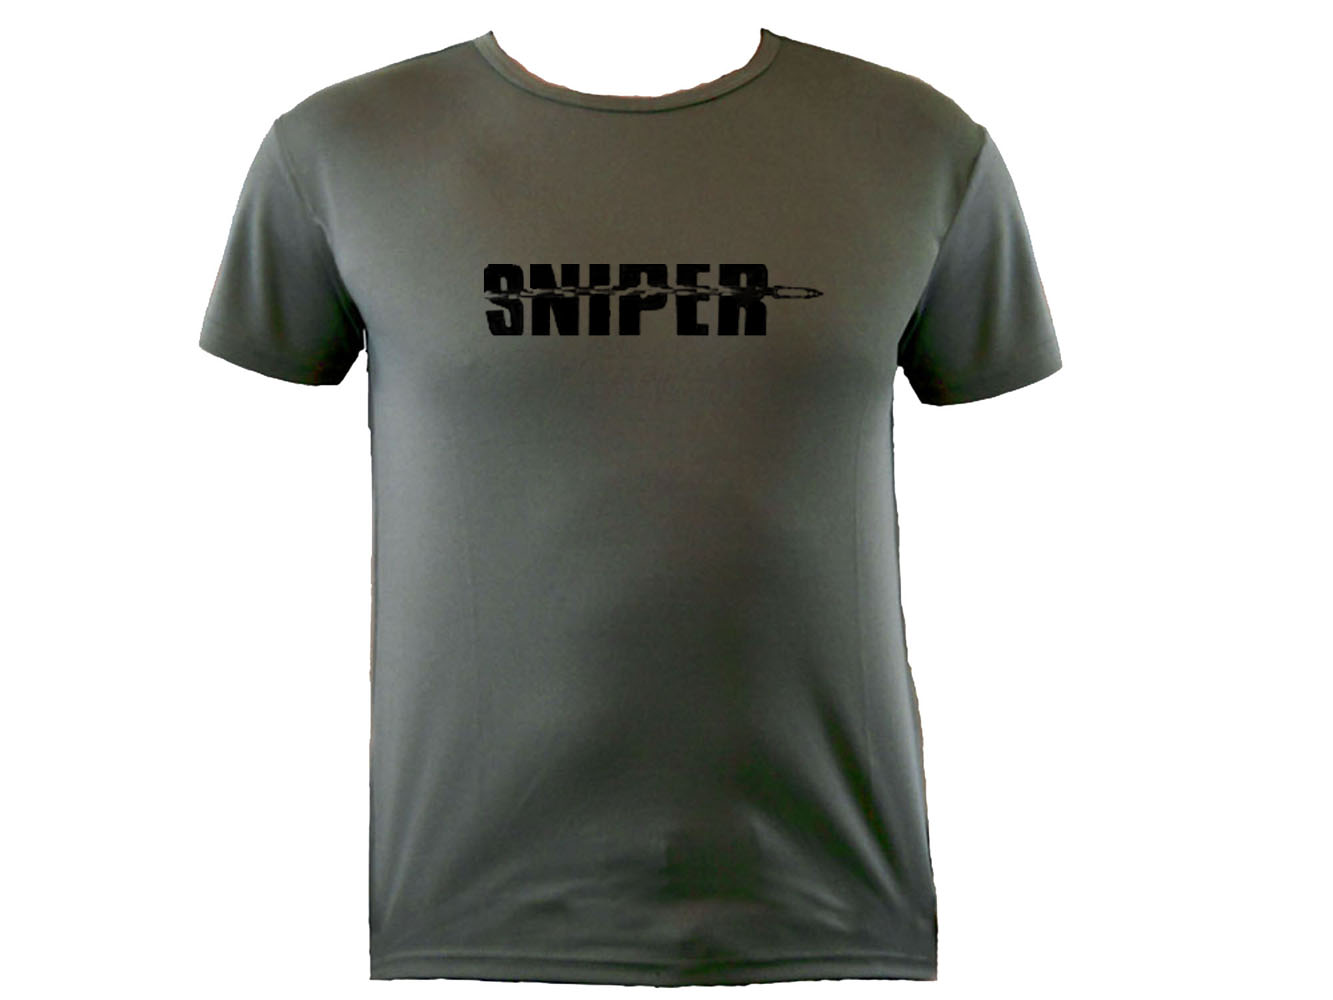 Sniper moisture wicking polyester (dri fit) t-shirt